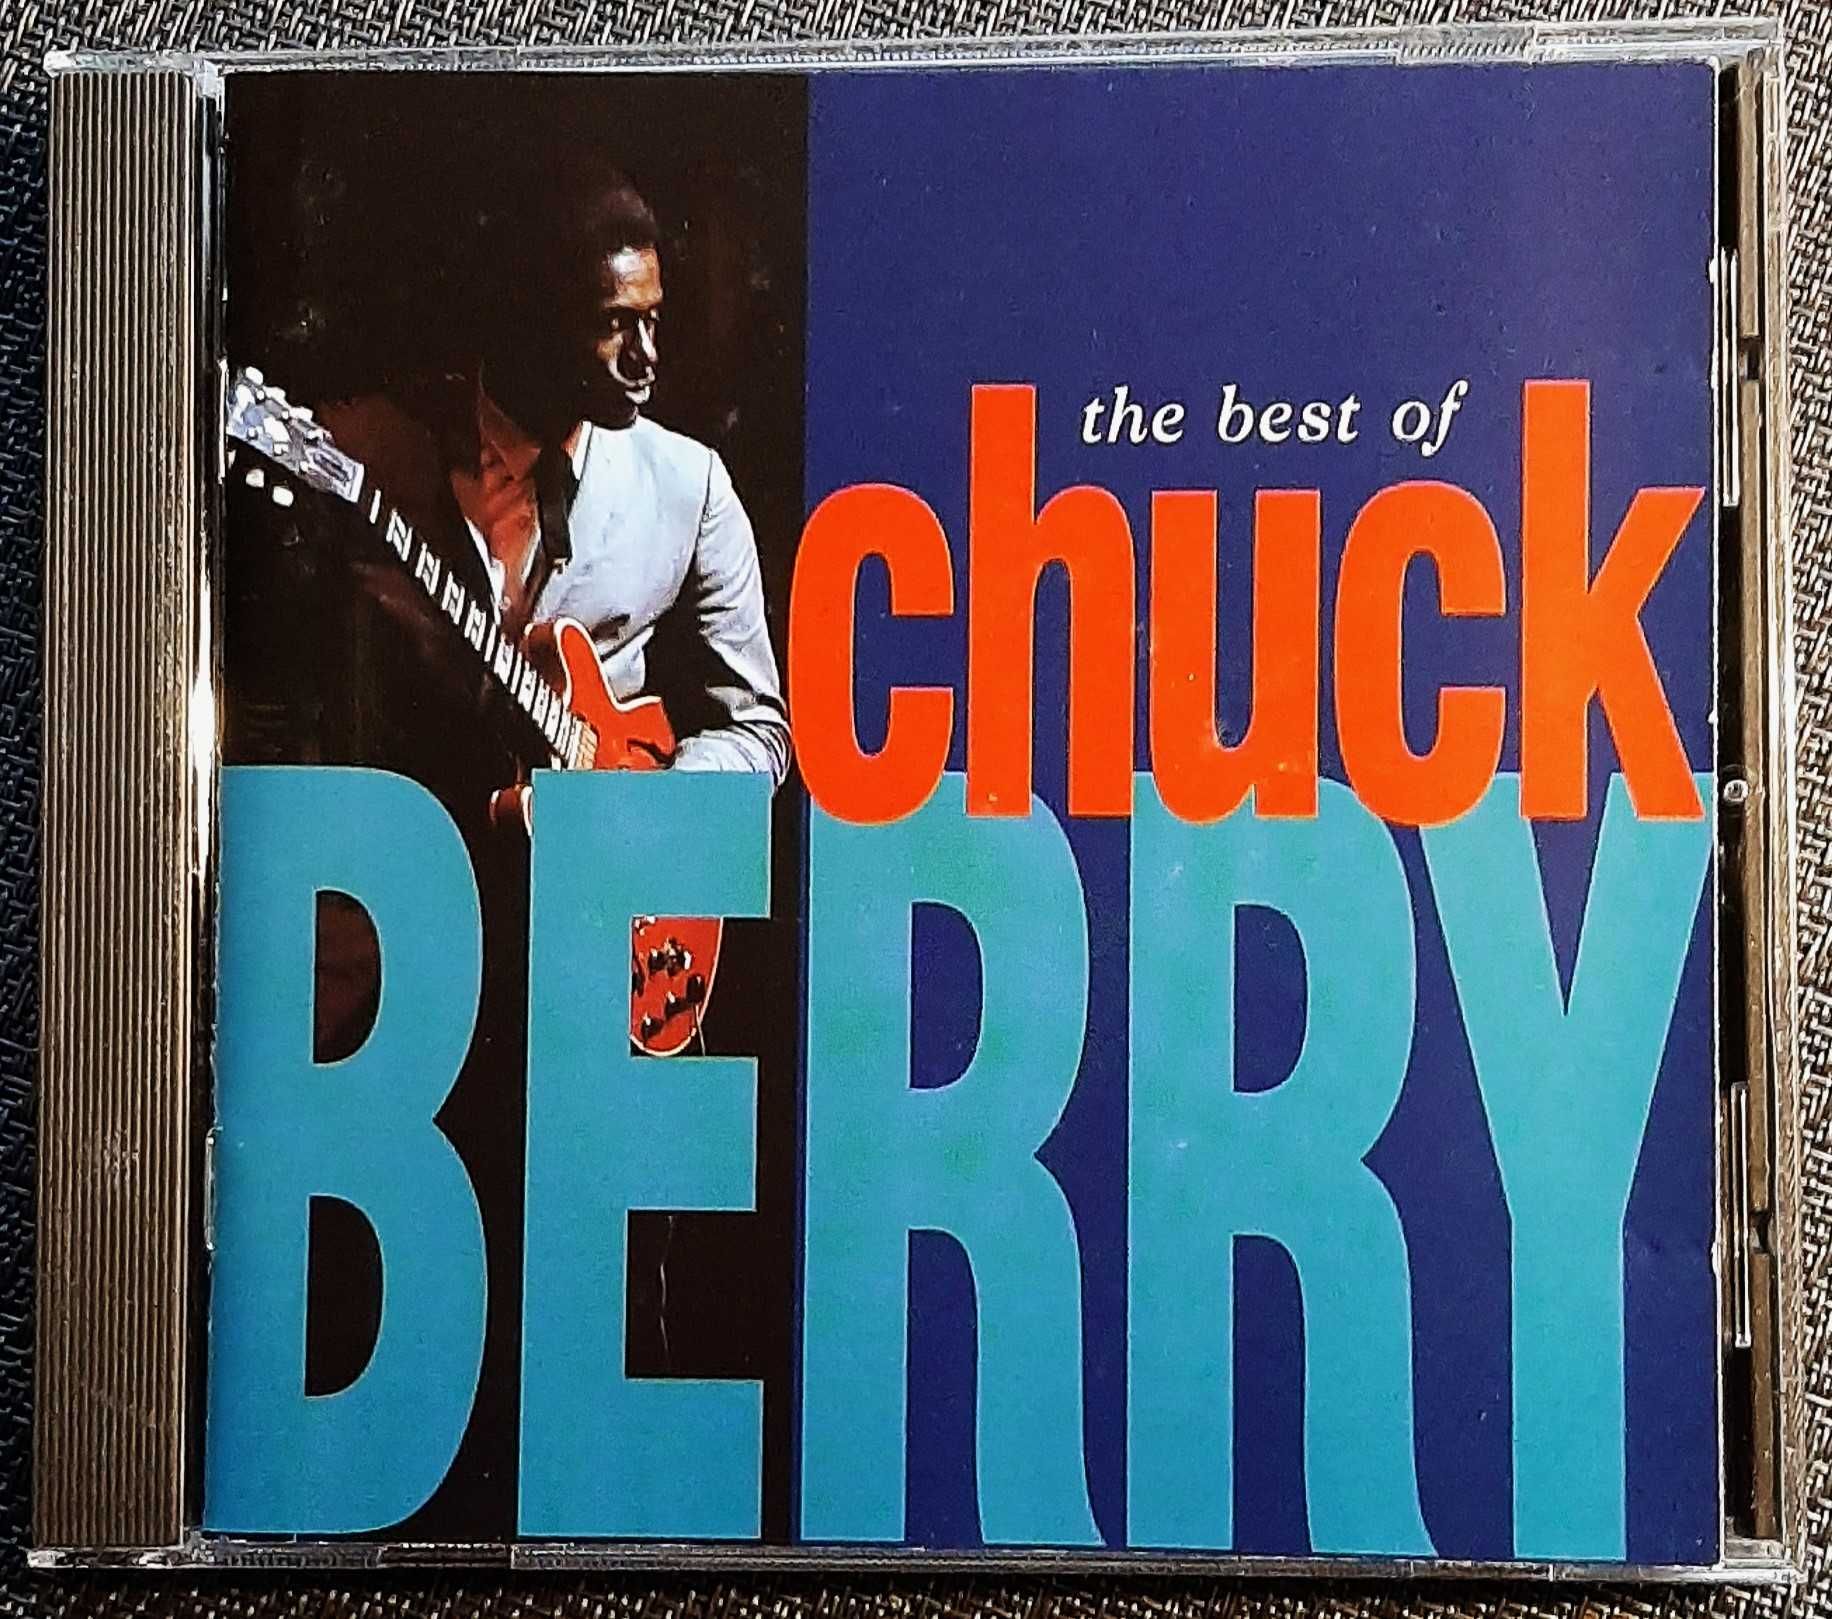 Polecam Album CD CHUCK BERRY - Album  The Best of CD